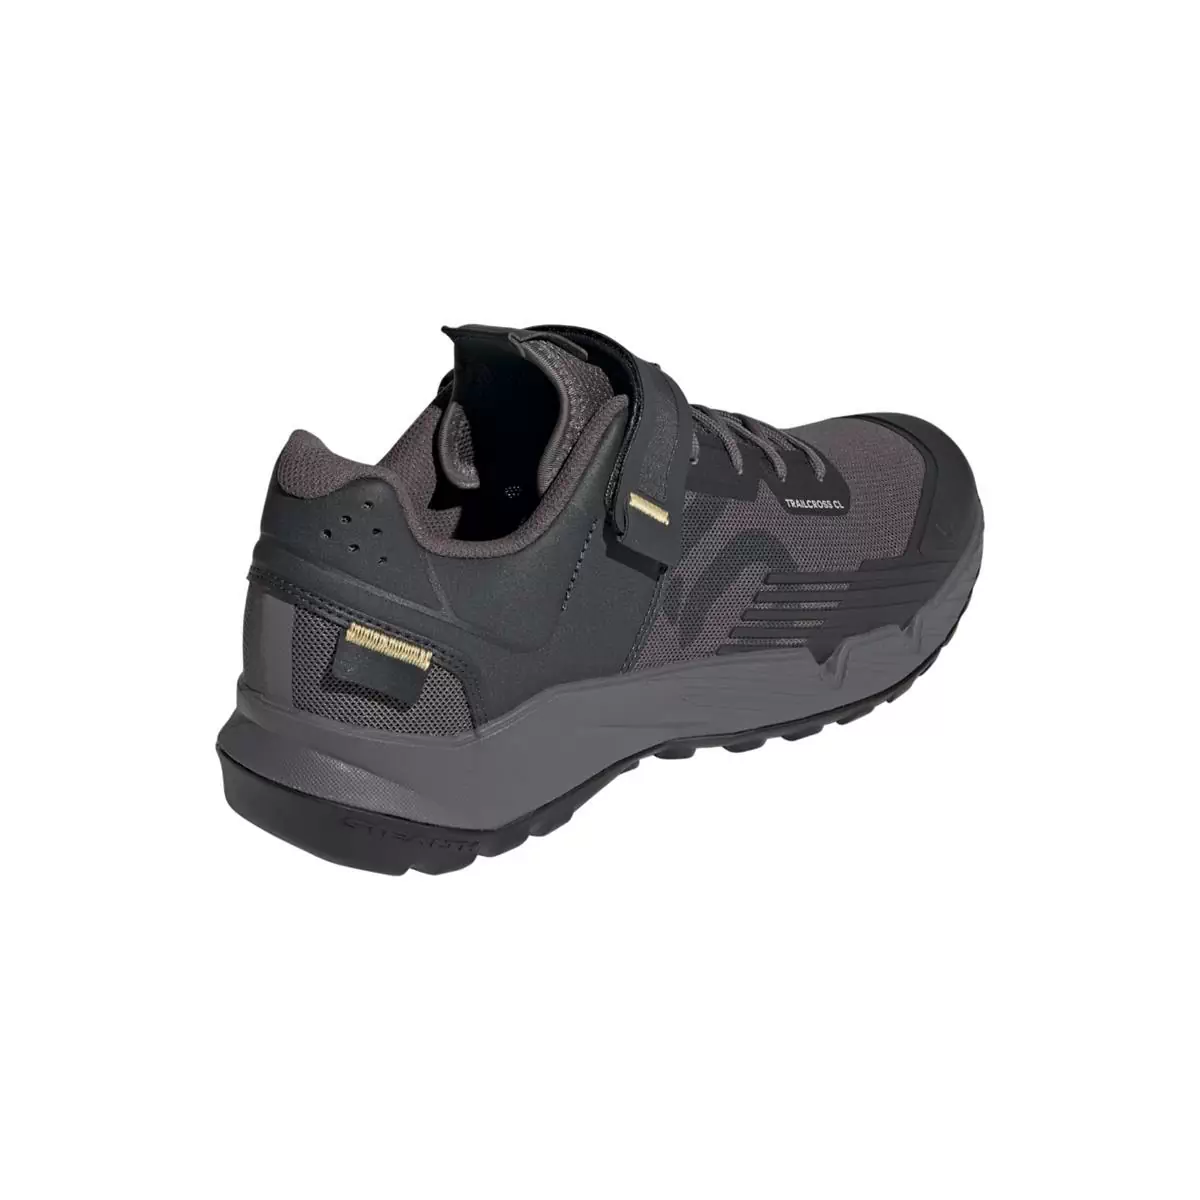 Clip 5.10 Trailcross MTB-Schuhe, Schwarz/Grau/Beige, Größe 38,5 #5